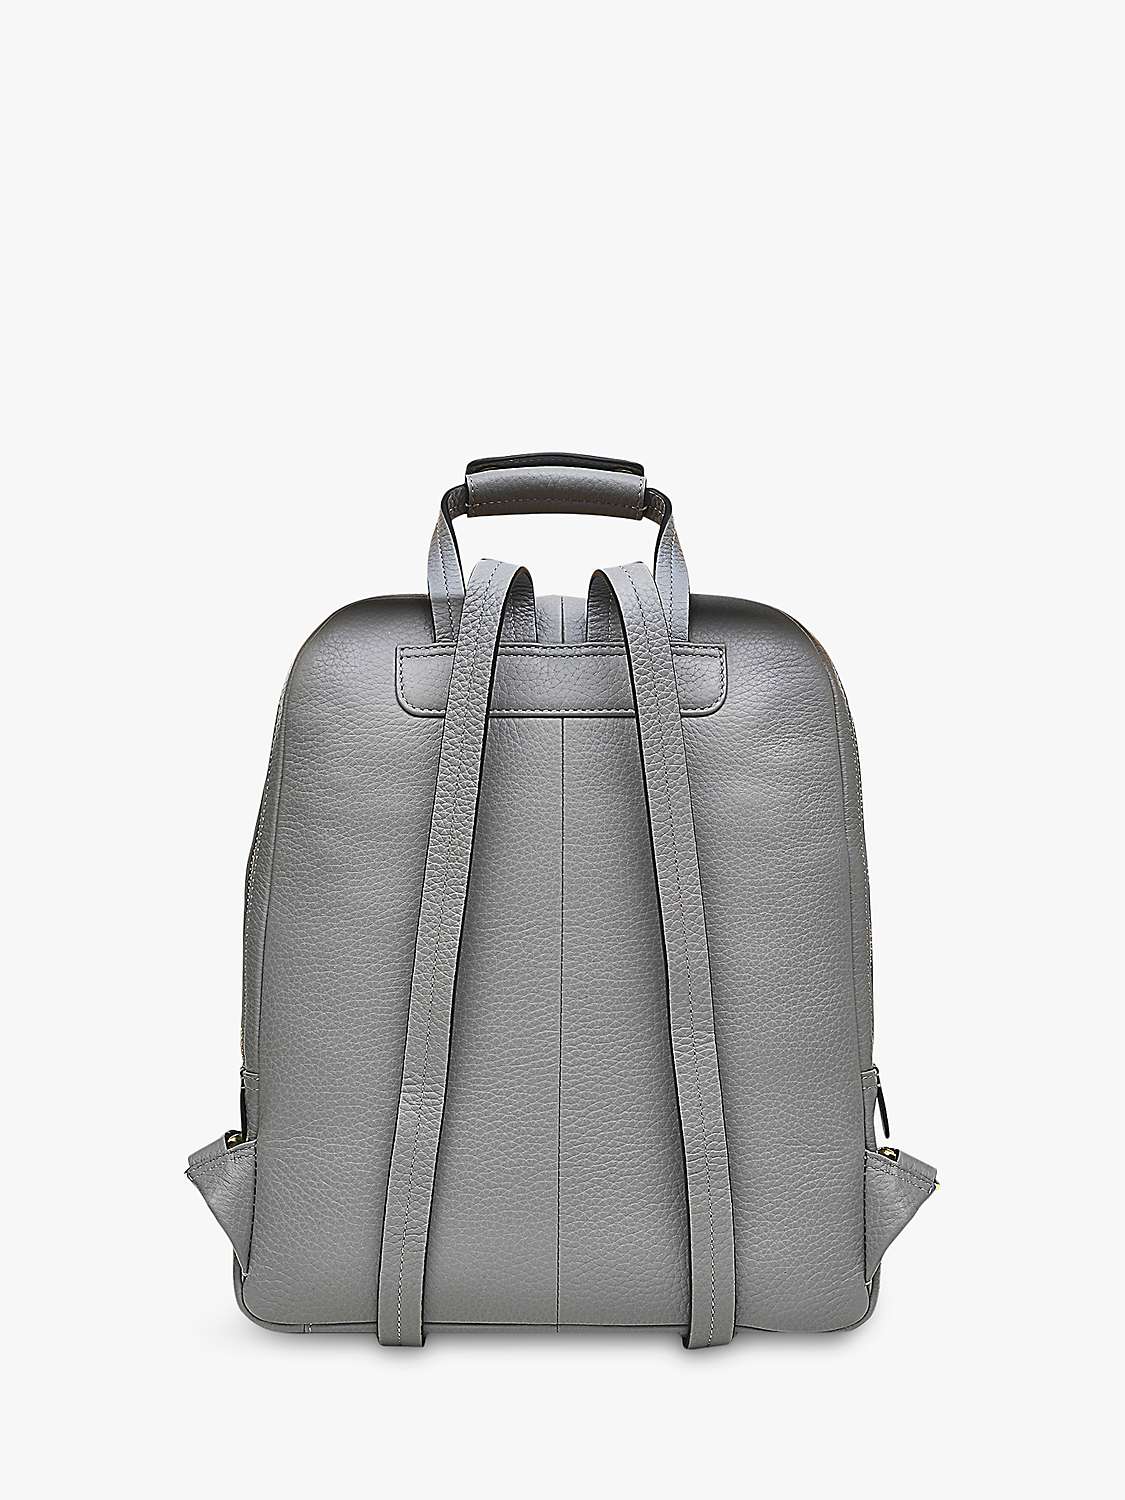 Buy Radley Dukes Place Medium Grainy Leather Zip-Around Backpack Online at johnlewis.com